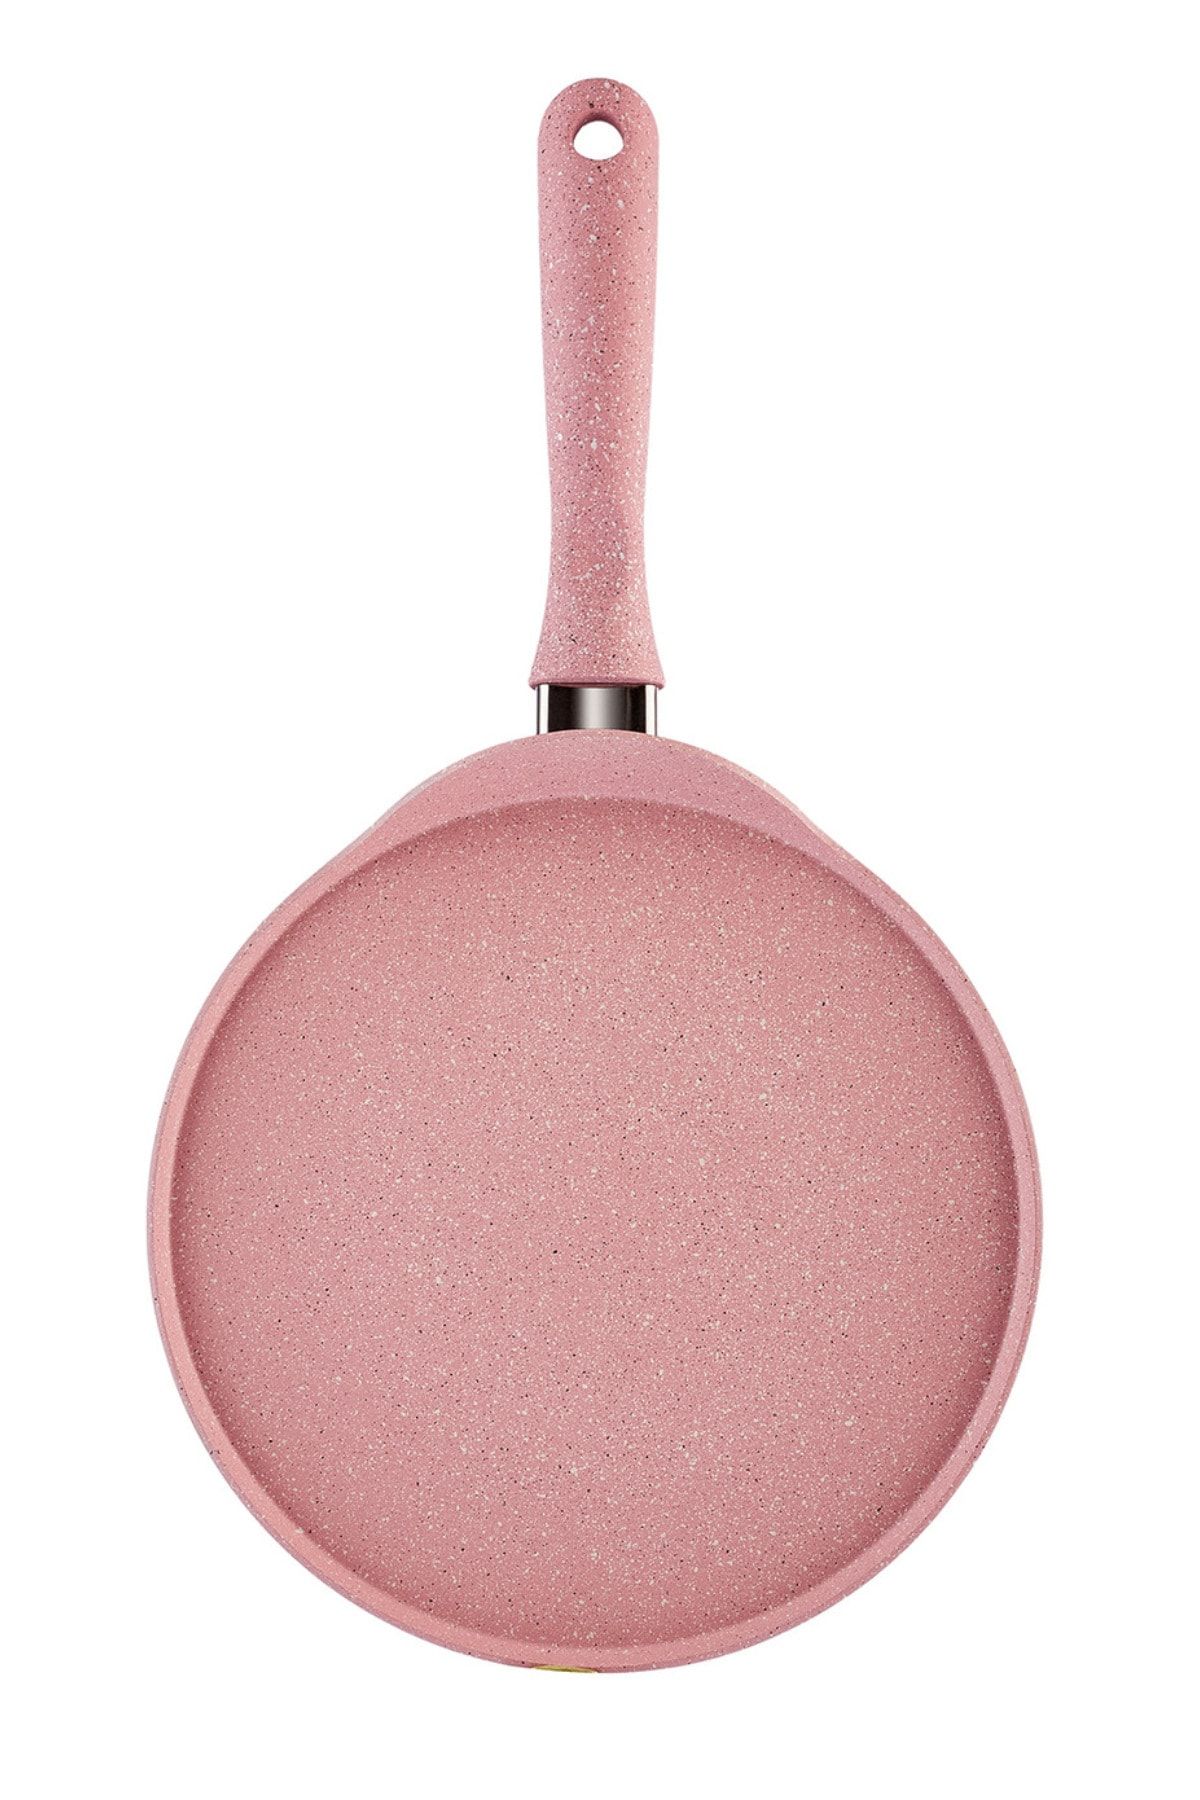 Karaca Mutfaksever Bio Granit Krep Tavası 26 Cm Pink